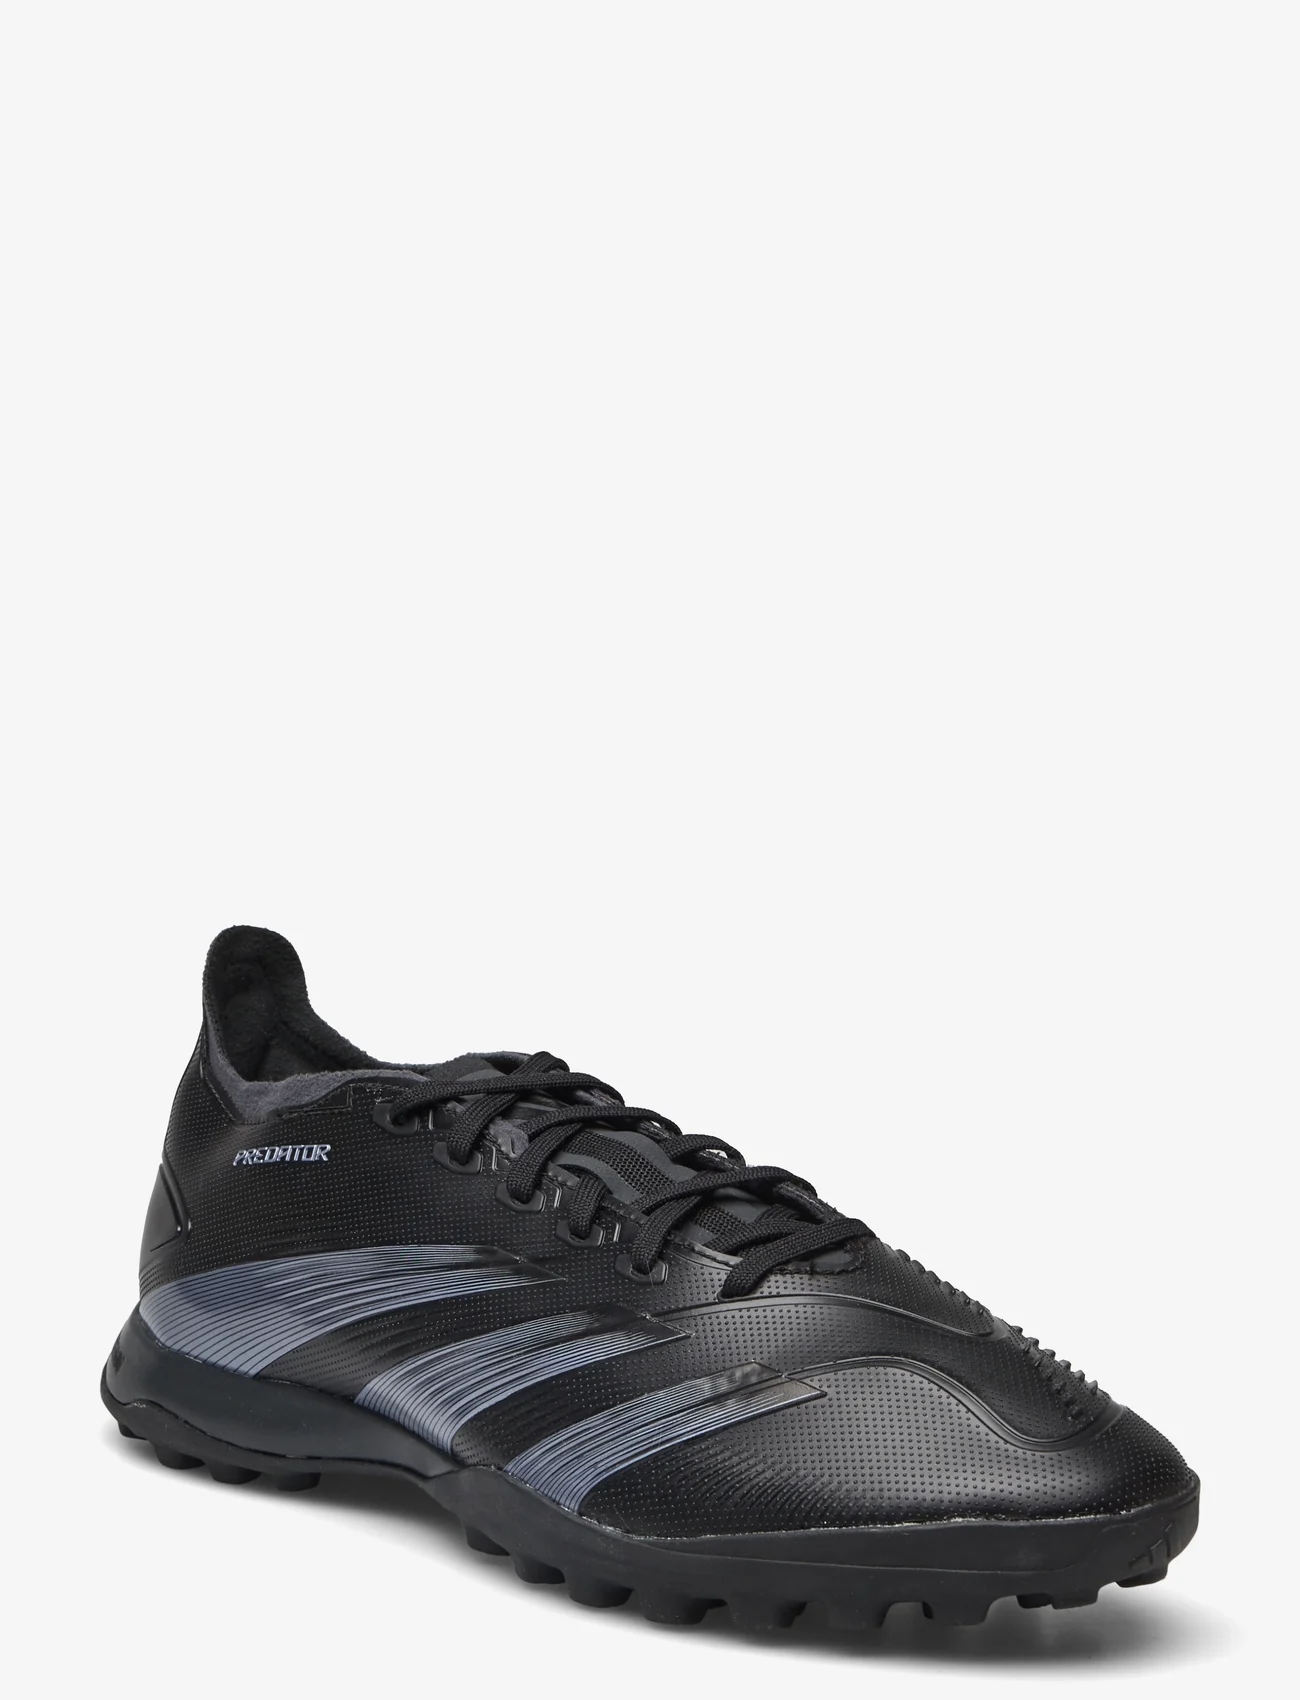 adidas Performance - PREDATOR LEAGUE TF - voetbalschoenen - cblack/carbon/cblack - 1